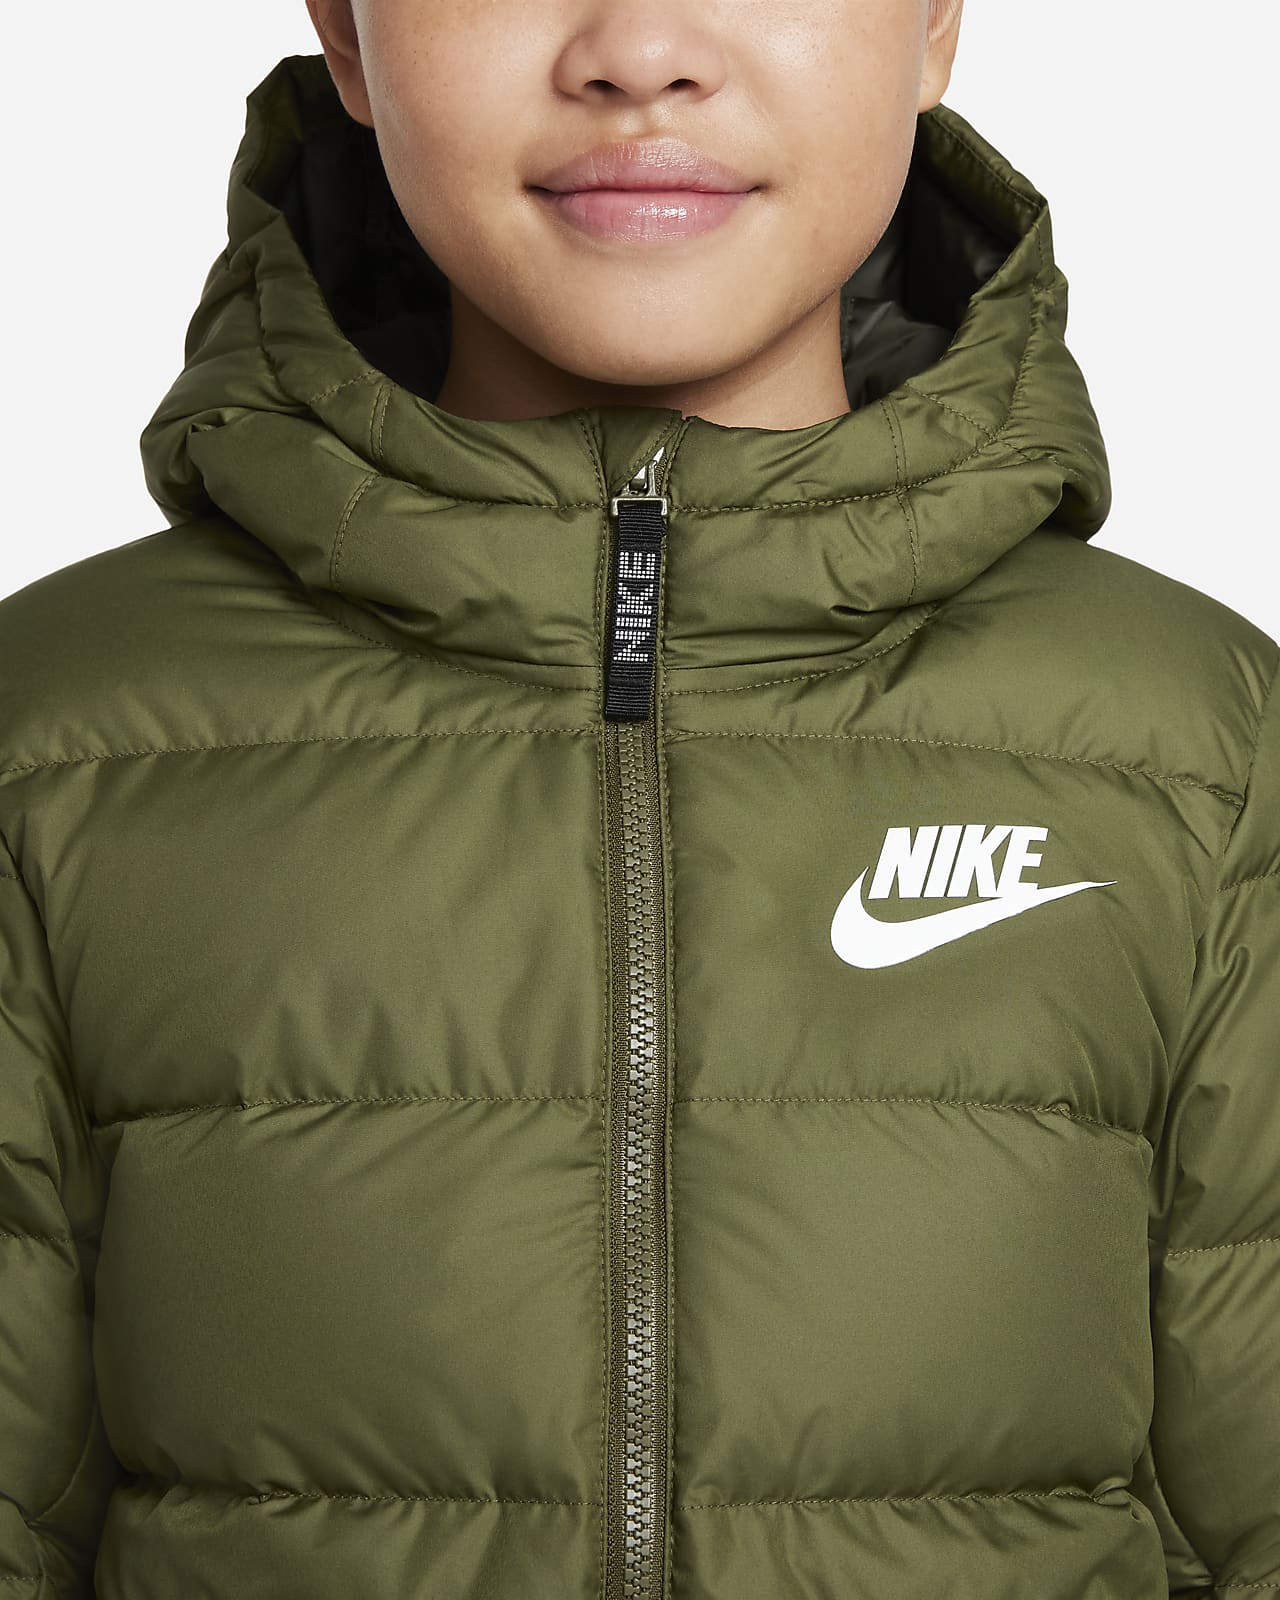 Nike Sportswear Youth Unisex Puffer Jacket 939554-222 Size Large Green $120